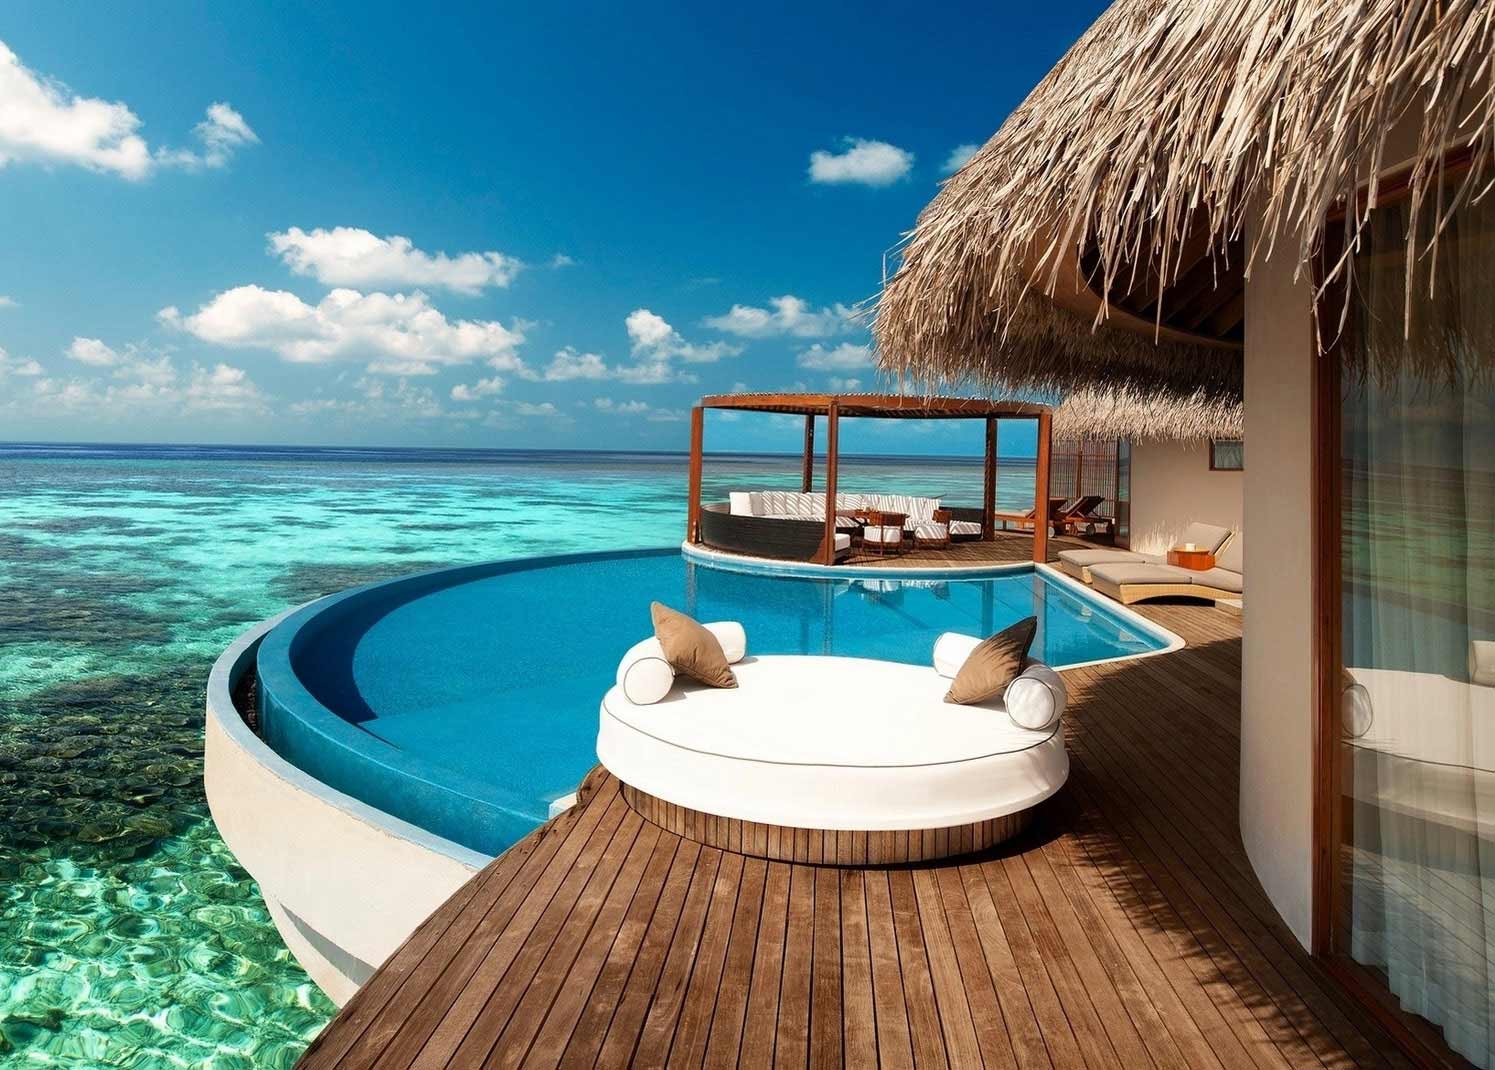 Luxurious Resort on an island